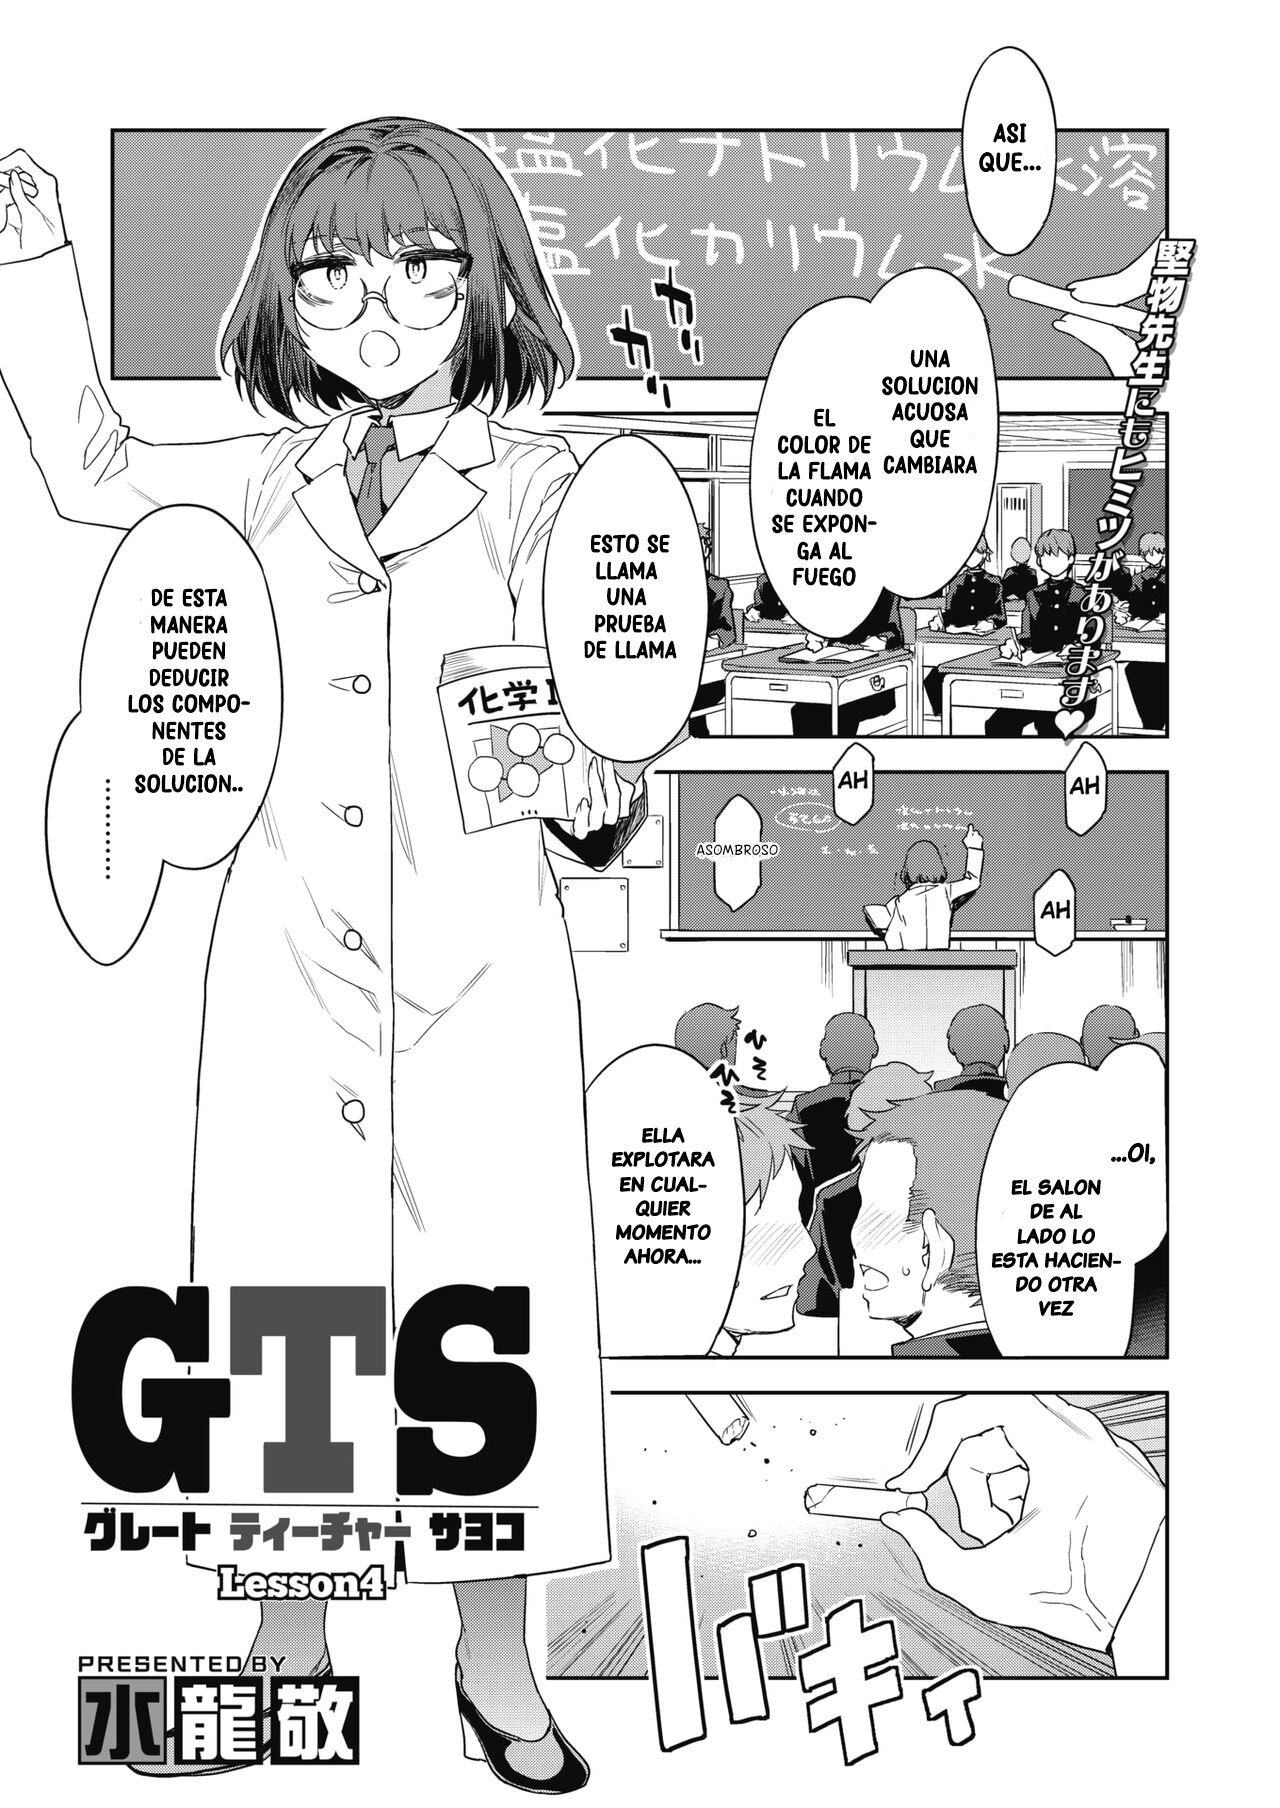 GTS - Great Teacher Sayoko Leccion 4 - 1